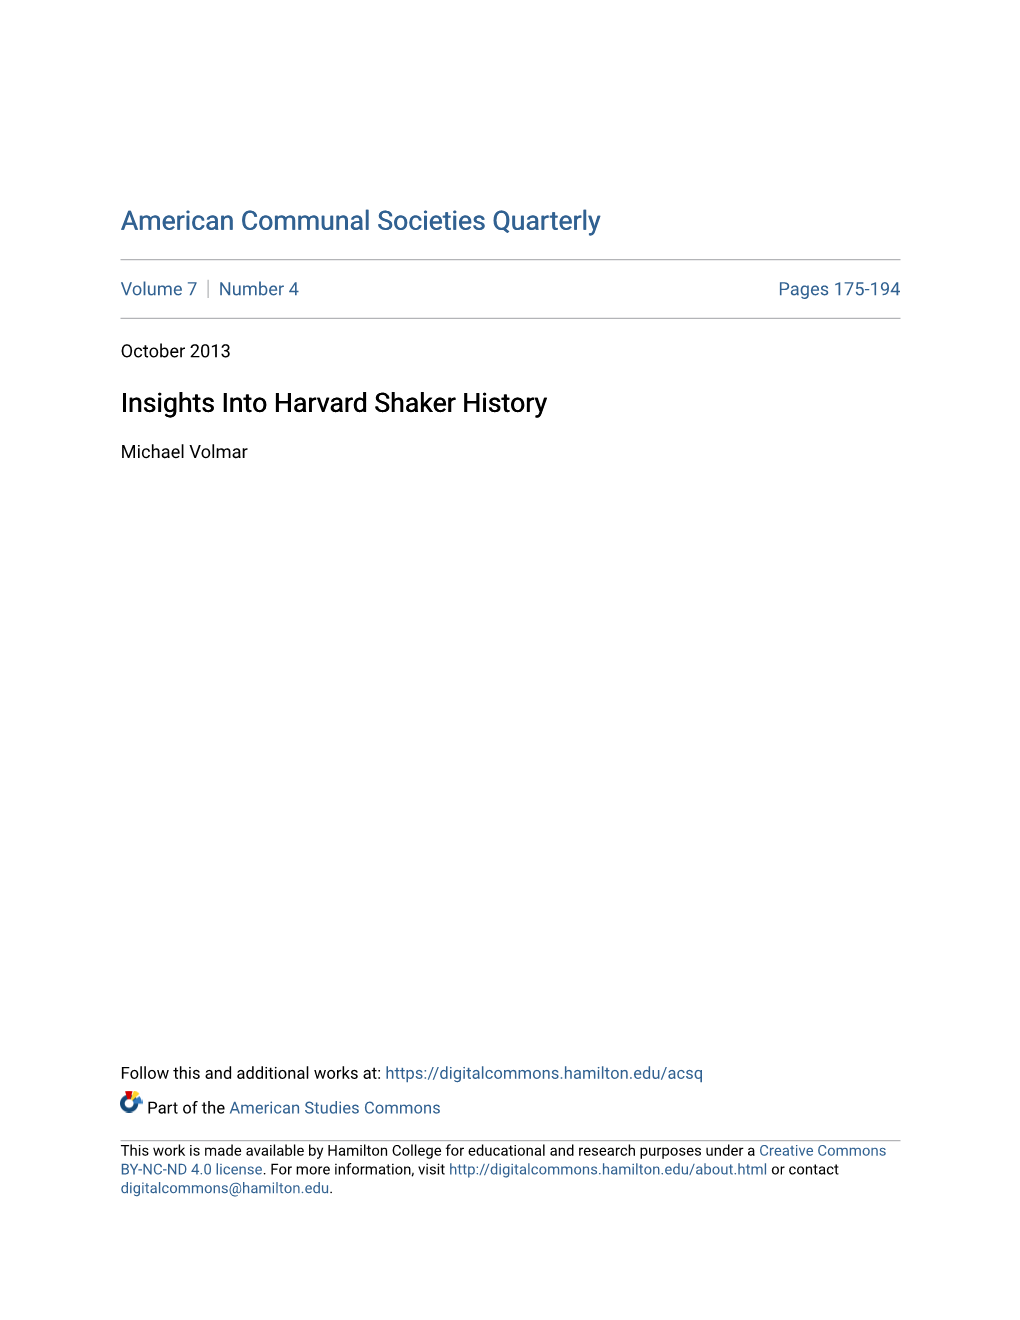 Insights Into Harvard Shaker History